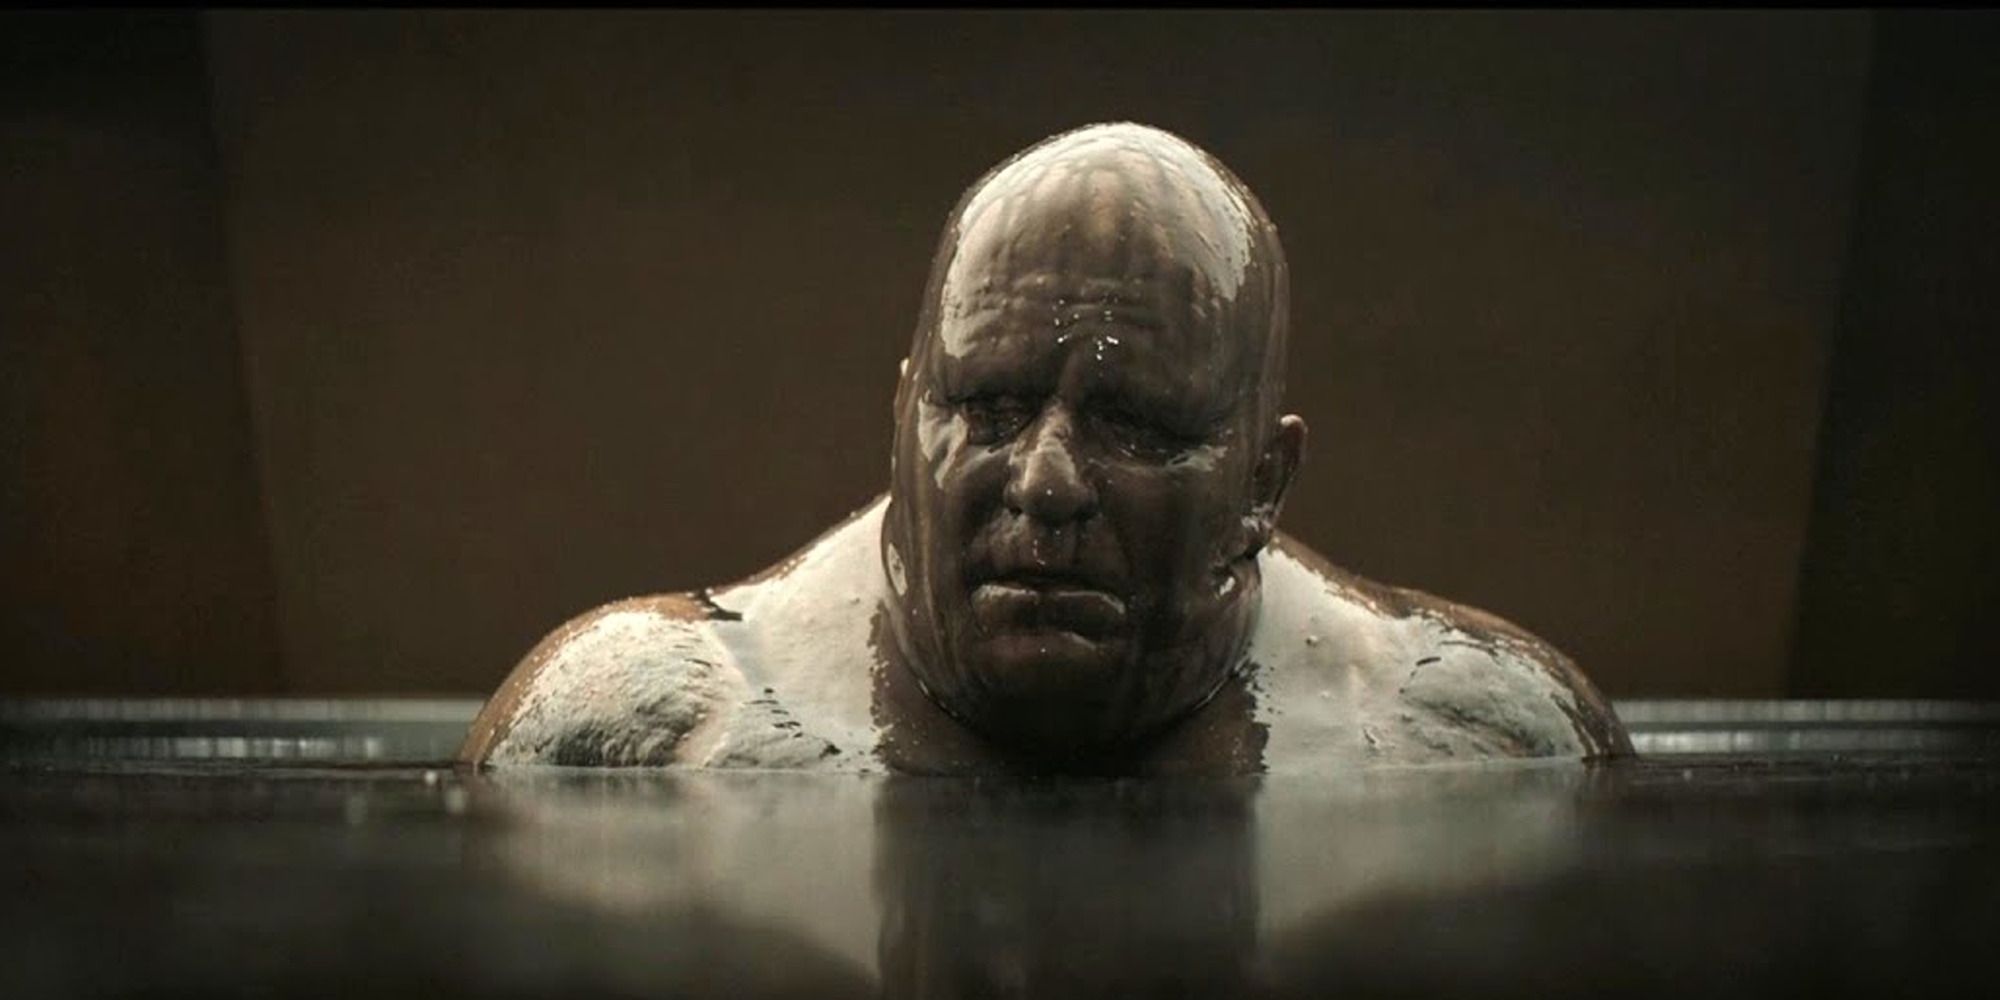 man covered in mud, in a mud bath